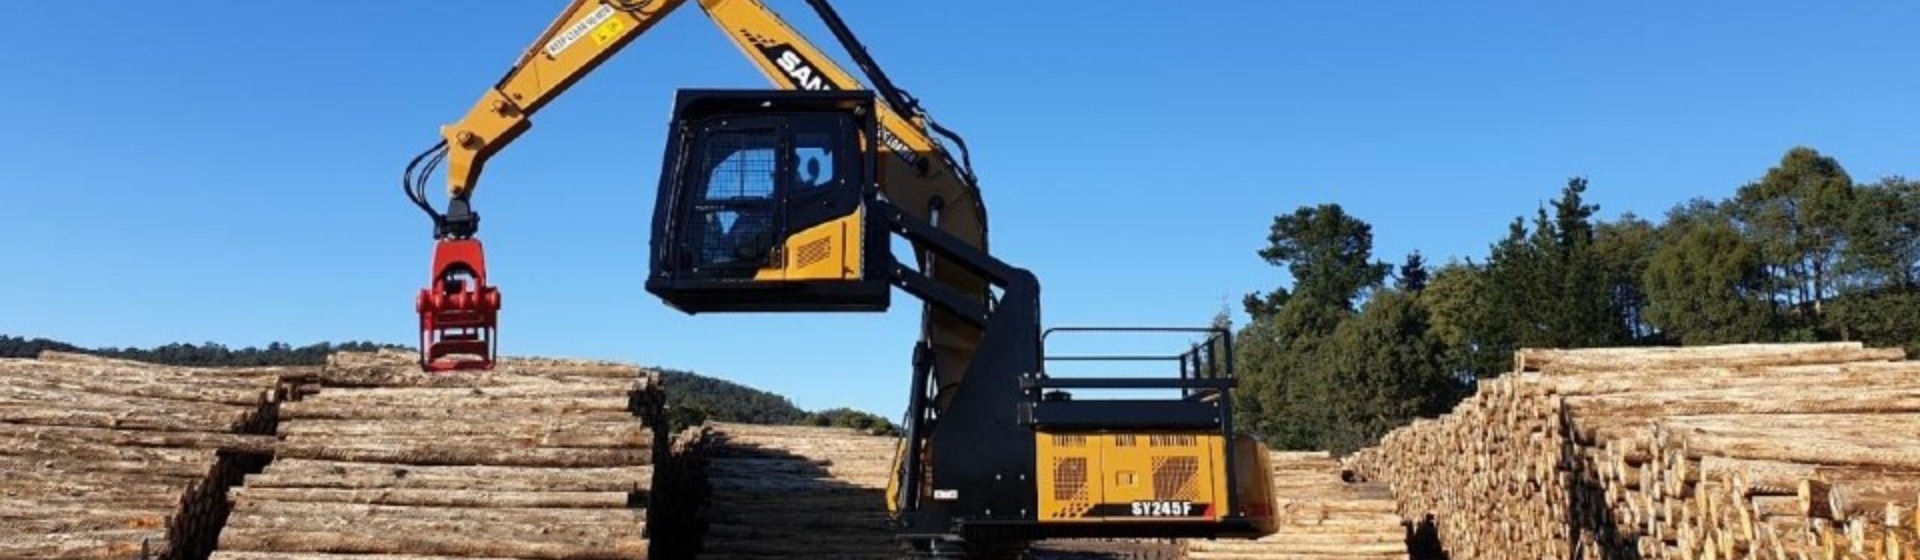 Sany forestry excavators- 6 years in Australia